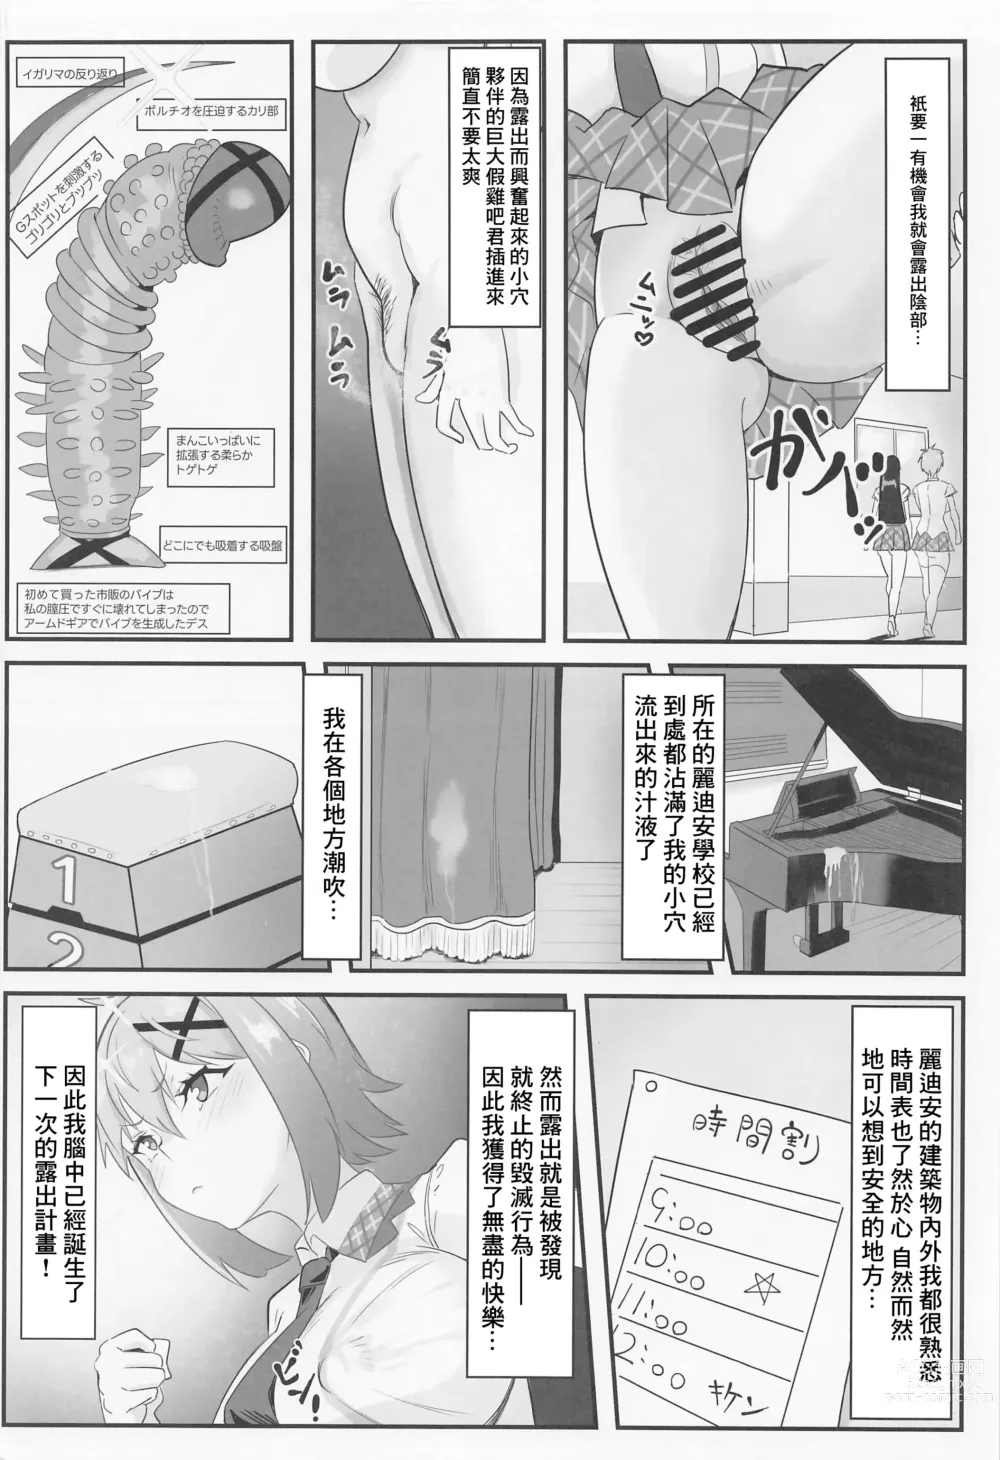 Page 3 of doujinshi Kiri-chan no Danshikounai Roshutsu Haikai Quest